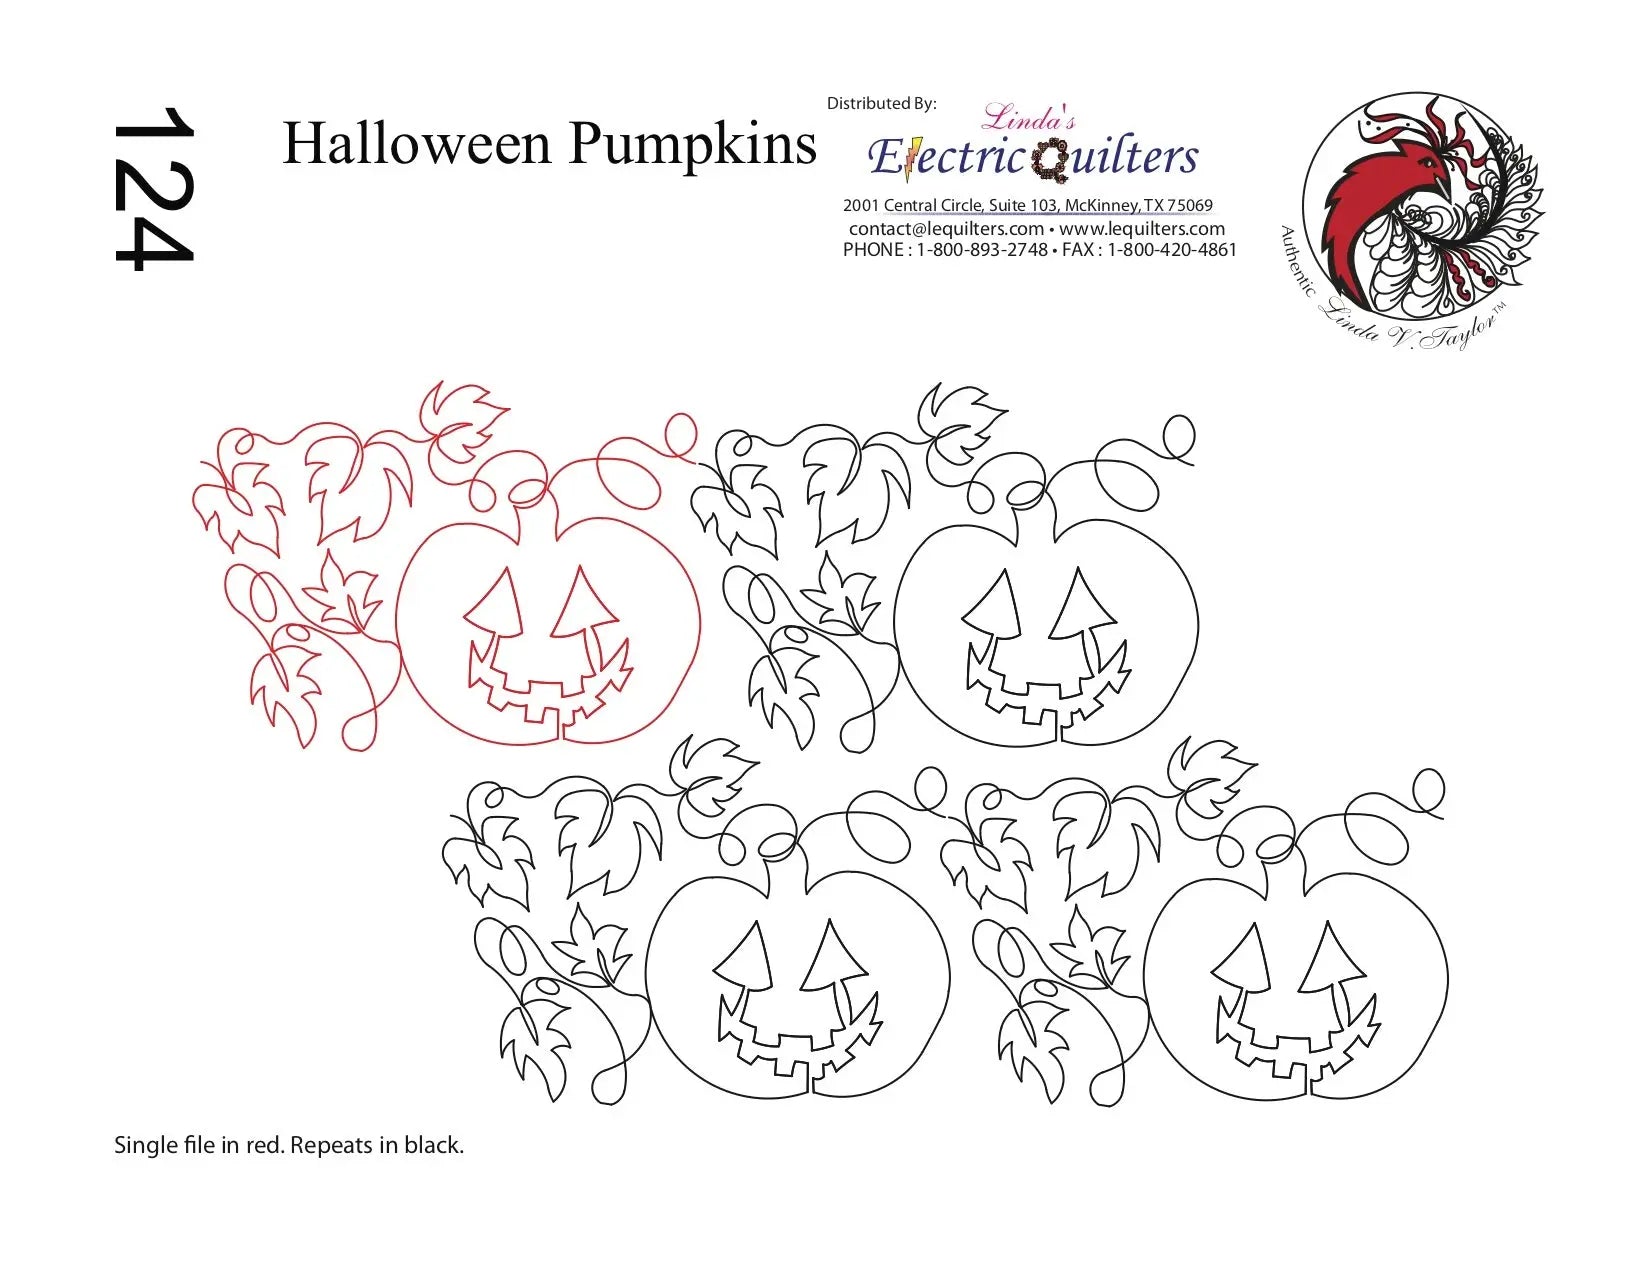 124 Halloween Pumpkins Pantograph by Linda V. Taylor - Linda's Electric Quilters